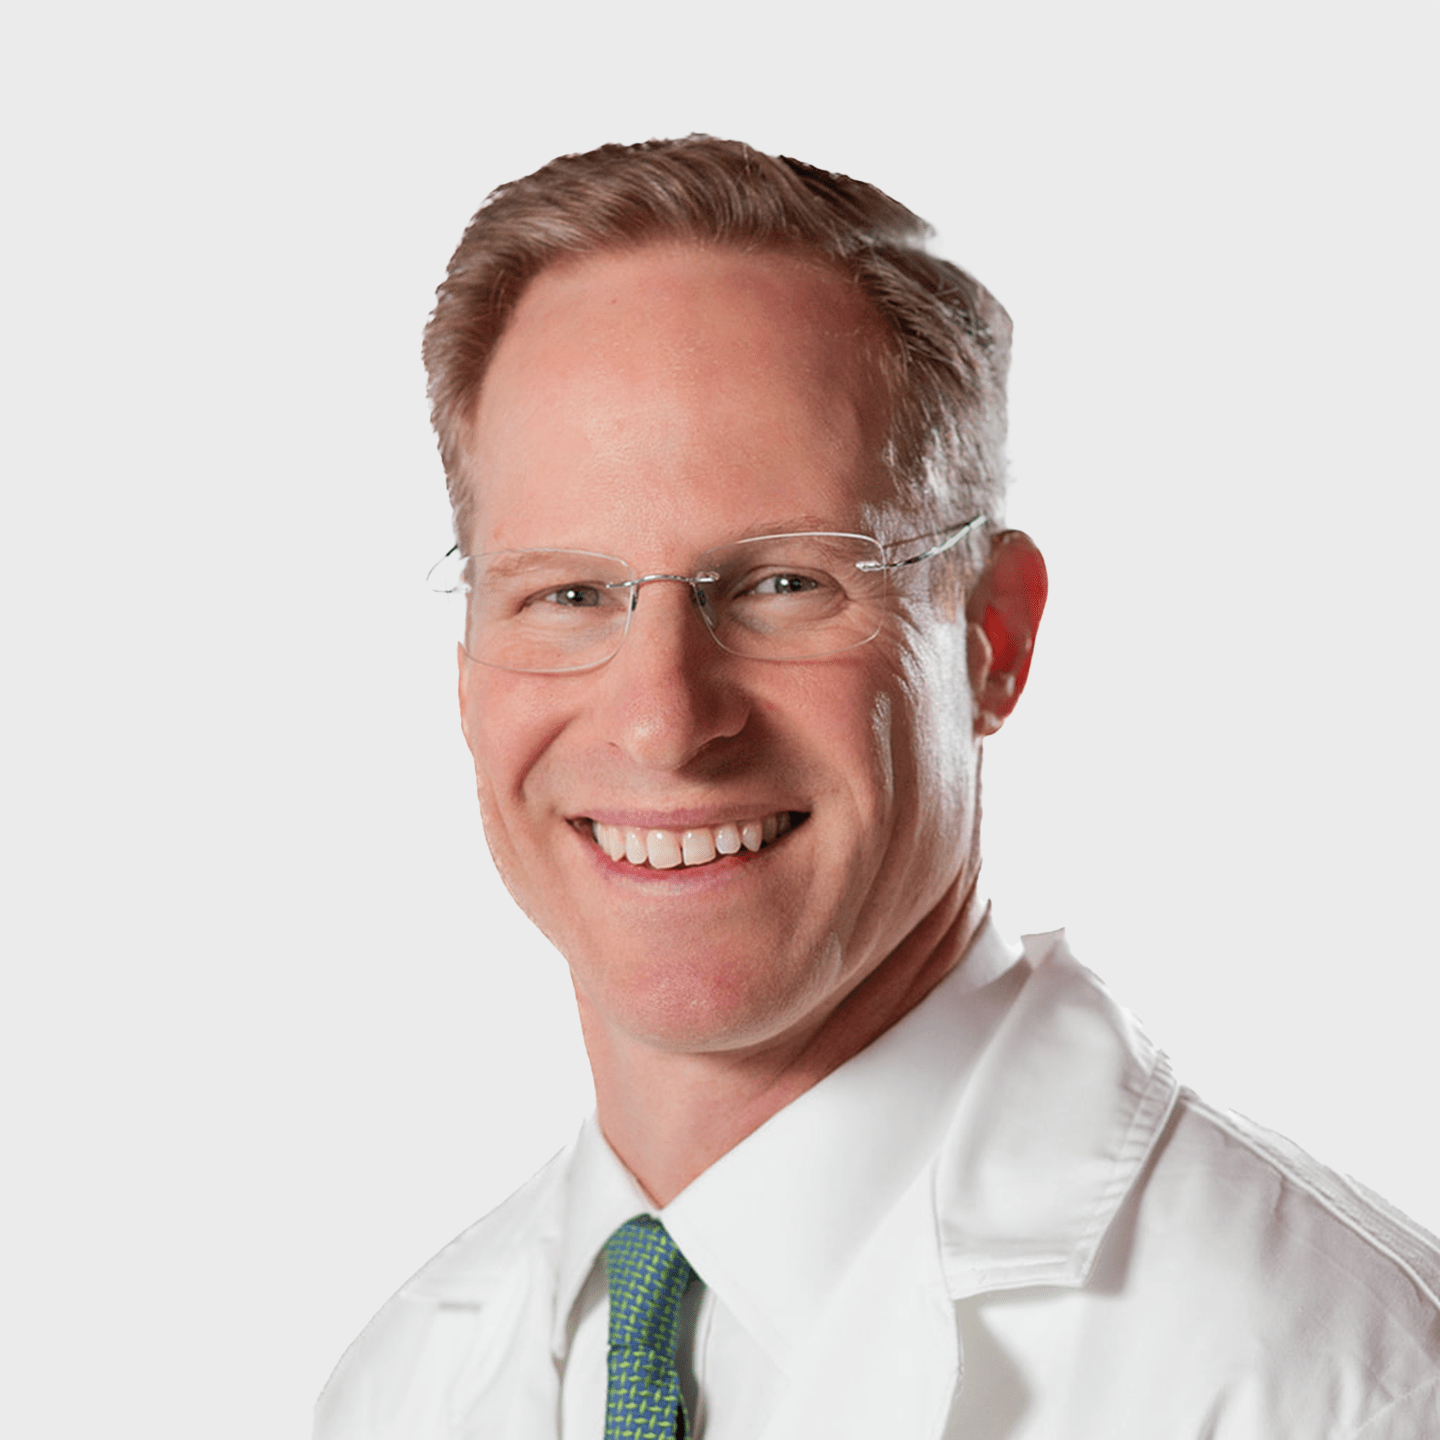 Physician Spotlight on Dr. James Walsh